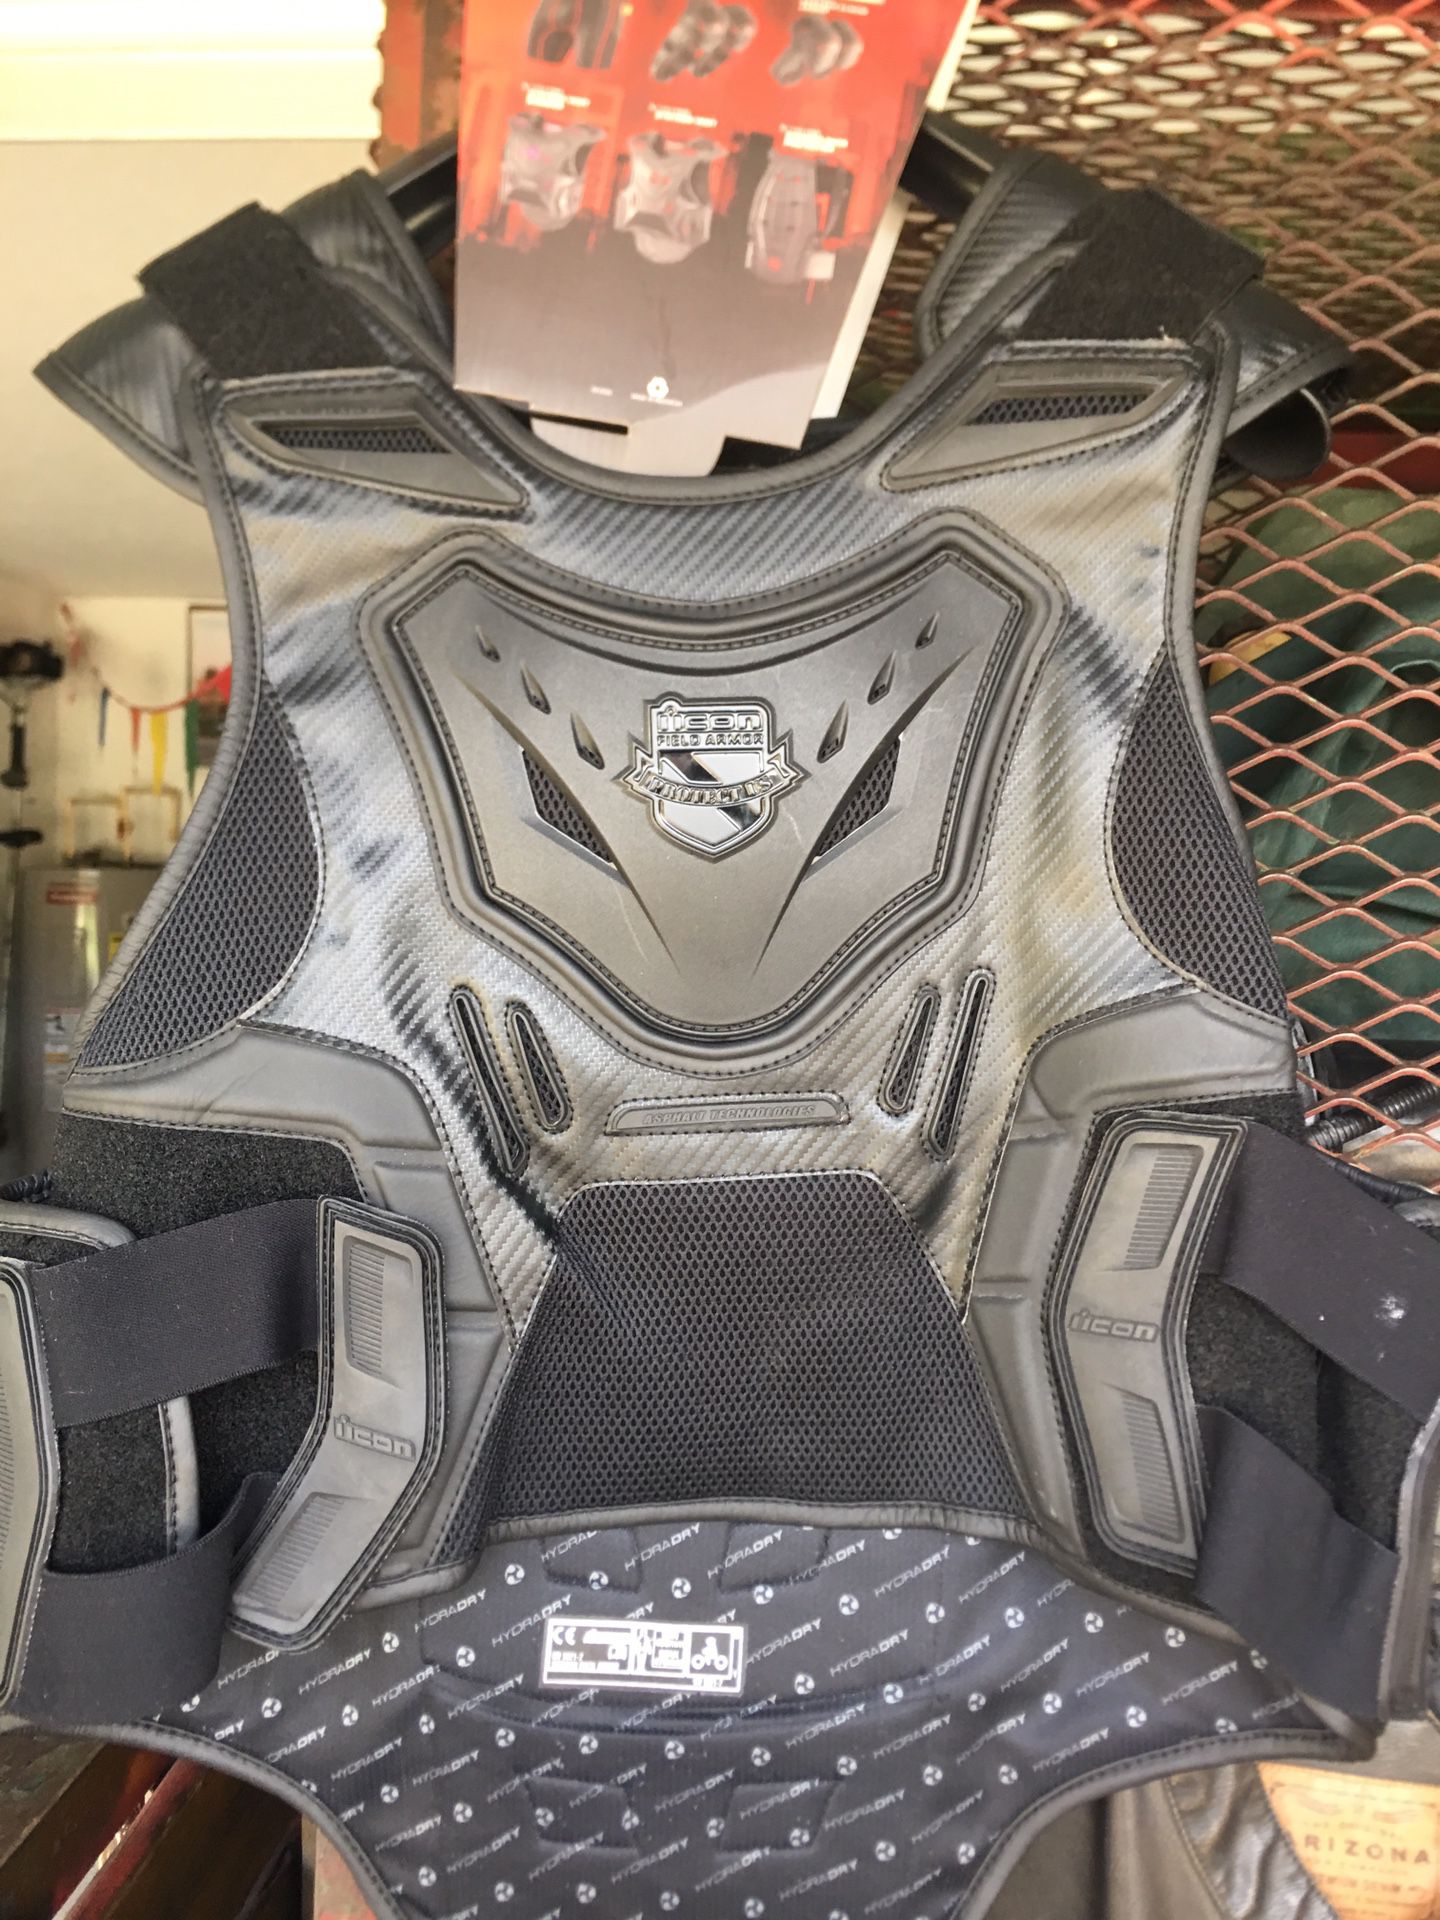 XXL armor vest Brand new